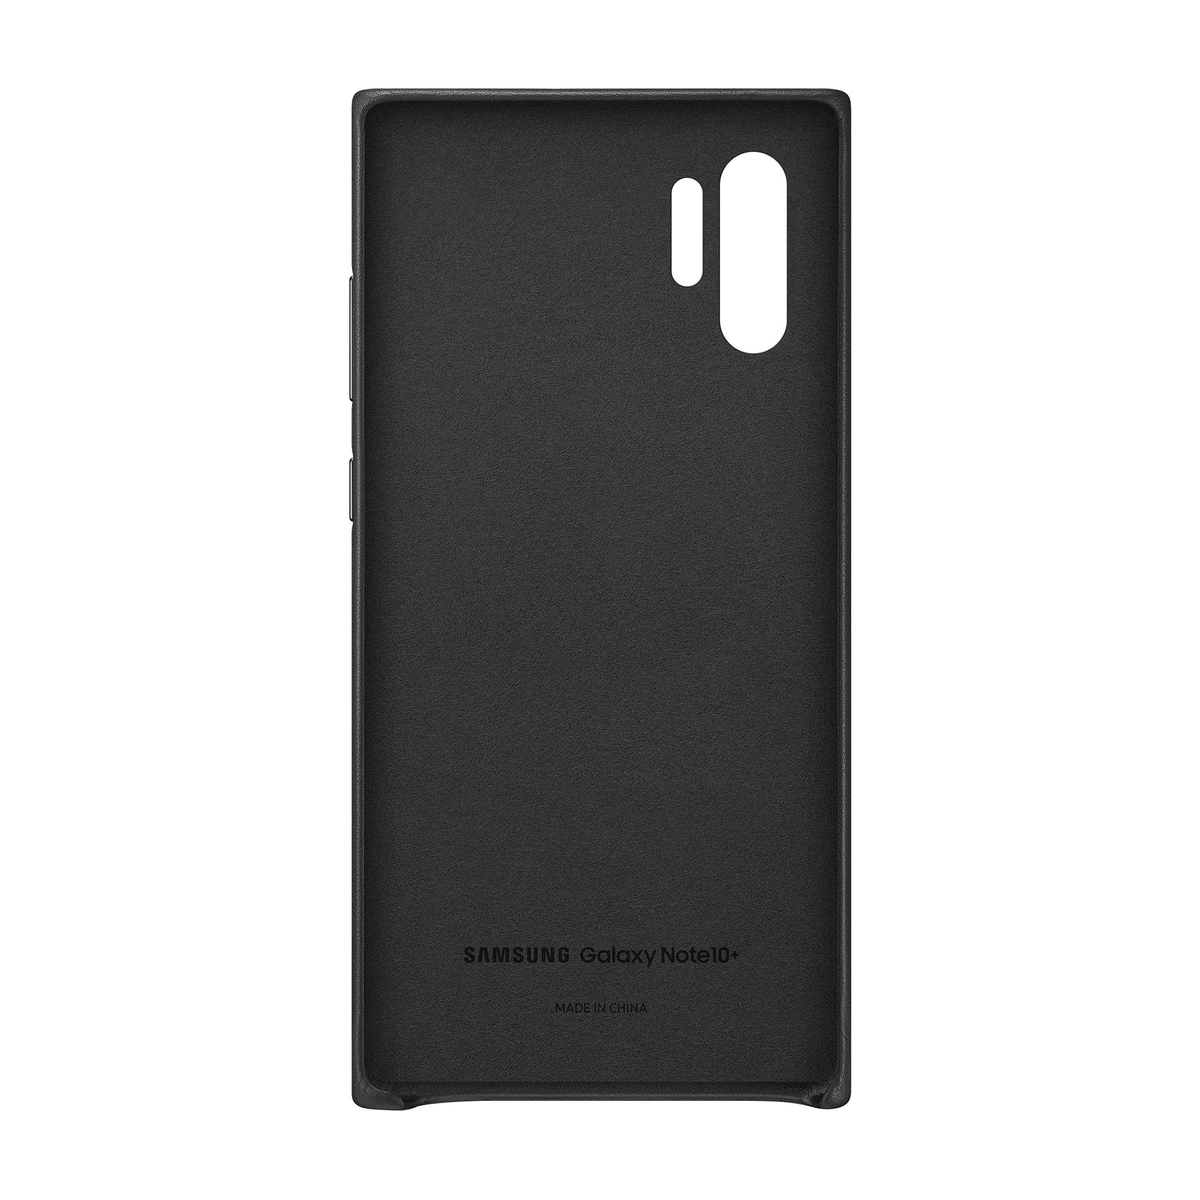 Samsung Galaxy Note10+ Leather Case VN975 Black